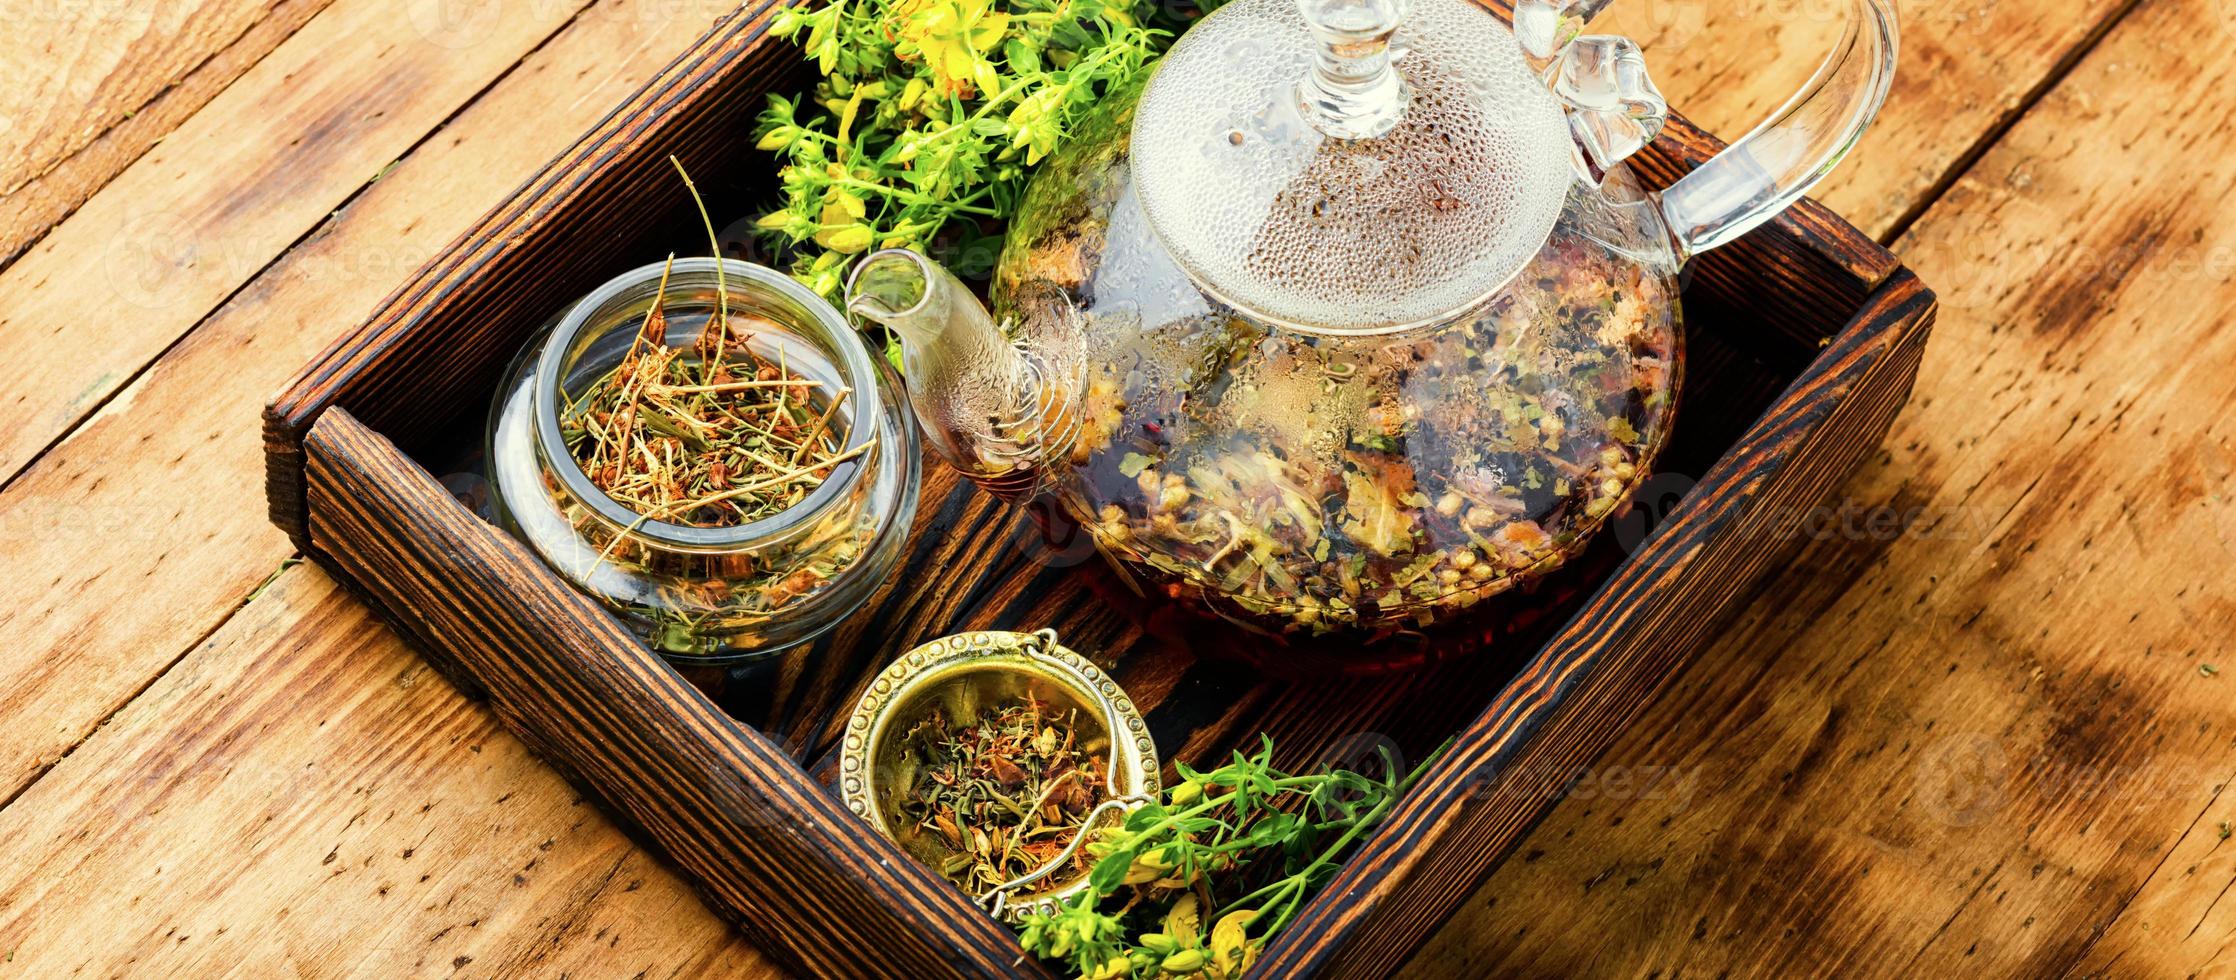 Hypericum in herbal medicine,alternative medicine photo